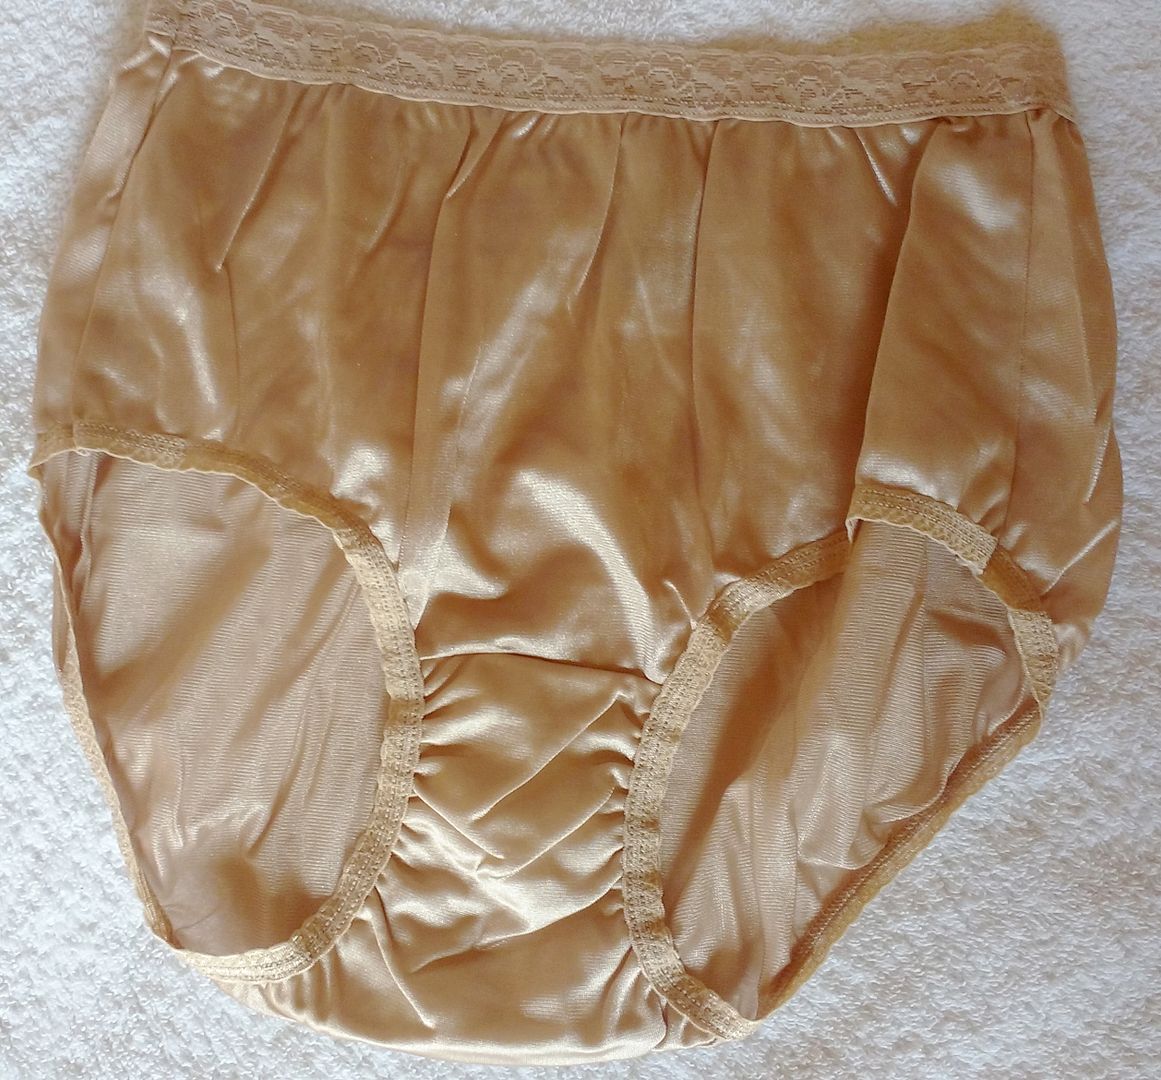 Pretty Almond Silky Vintage Style Nylon Full Panties Brief Knickers L 14 Us 8 Ebay 